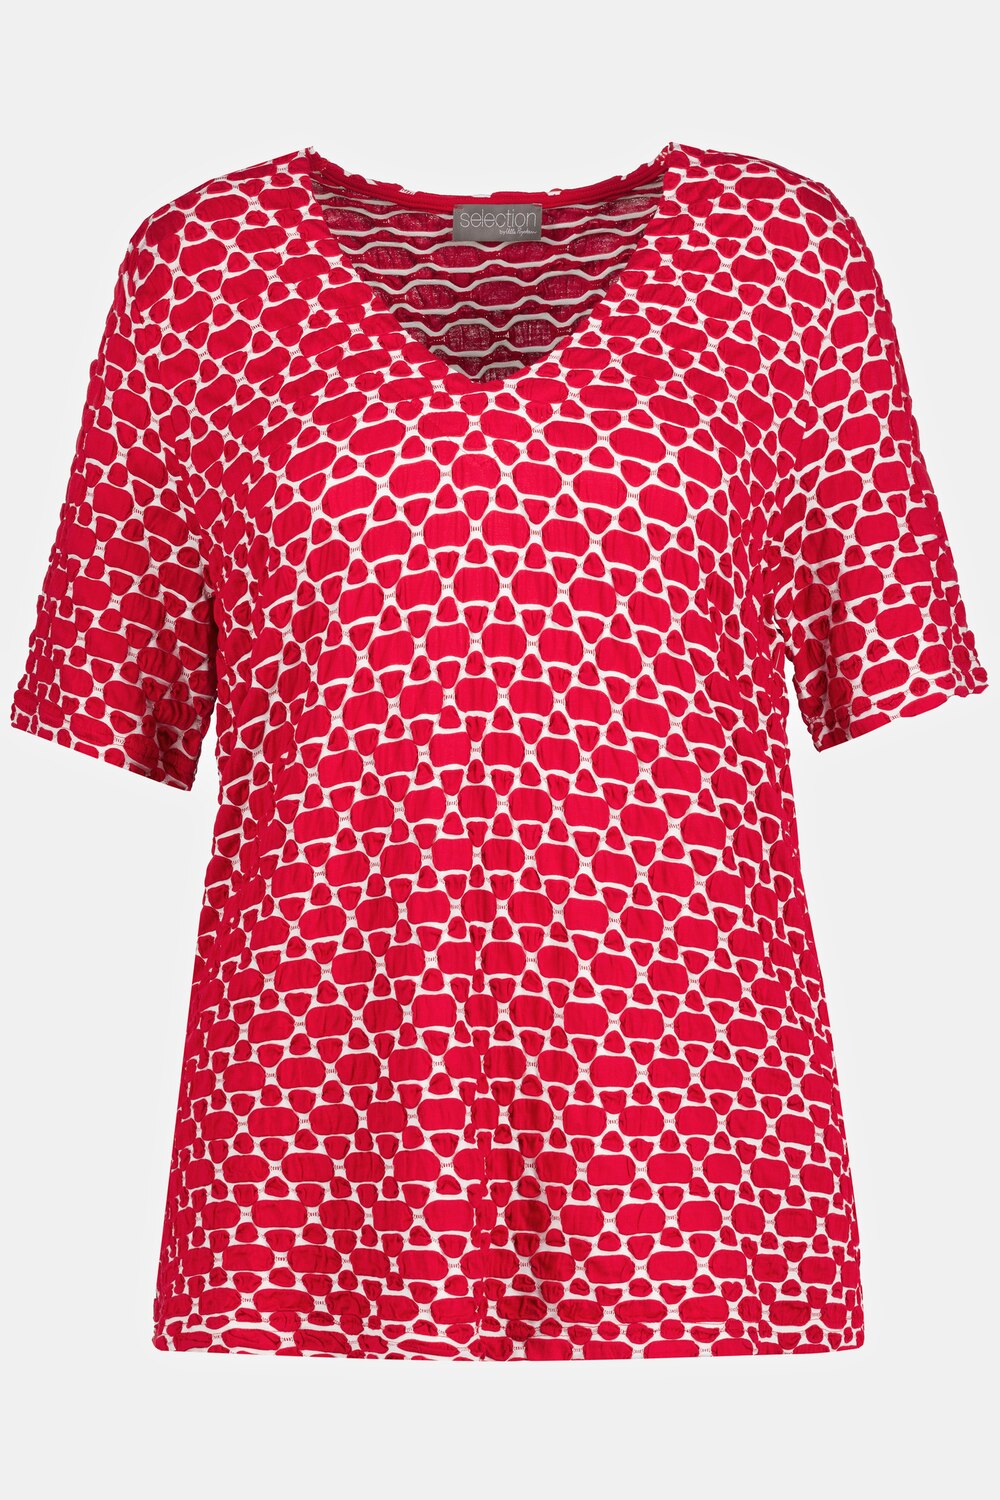 Grote Maten shirt, Dames, rood, Maat: 58/60, Viscose/Polyester, Ulla Popken